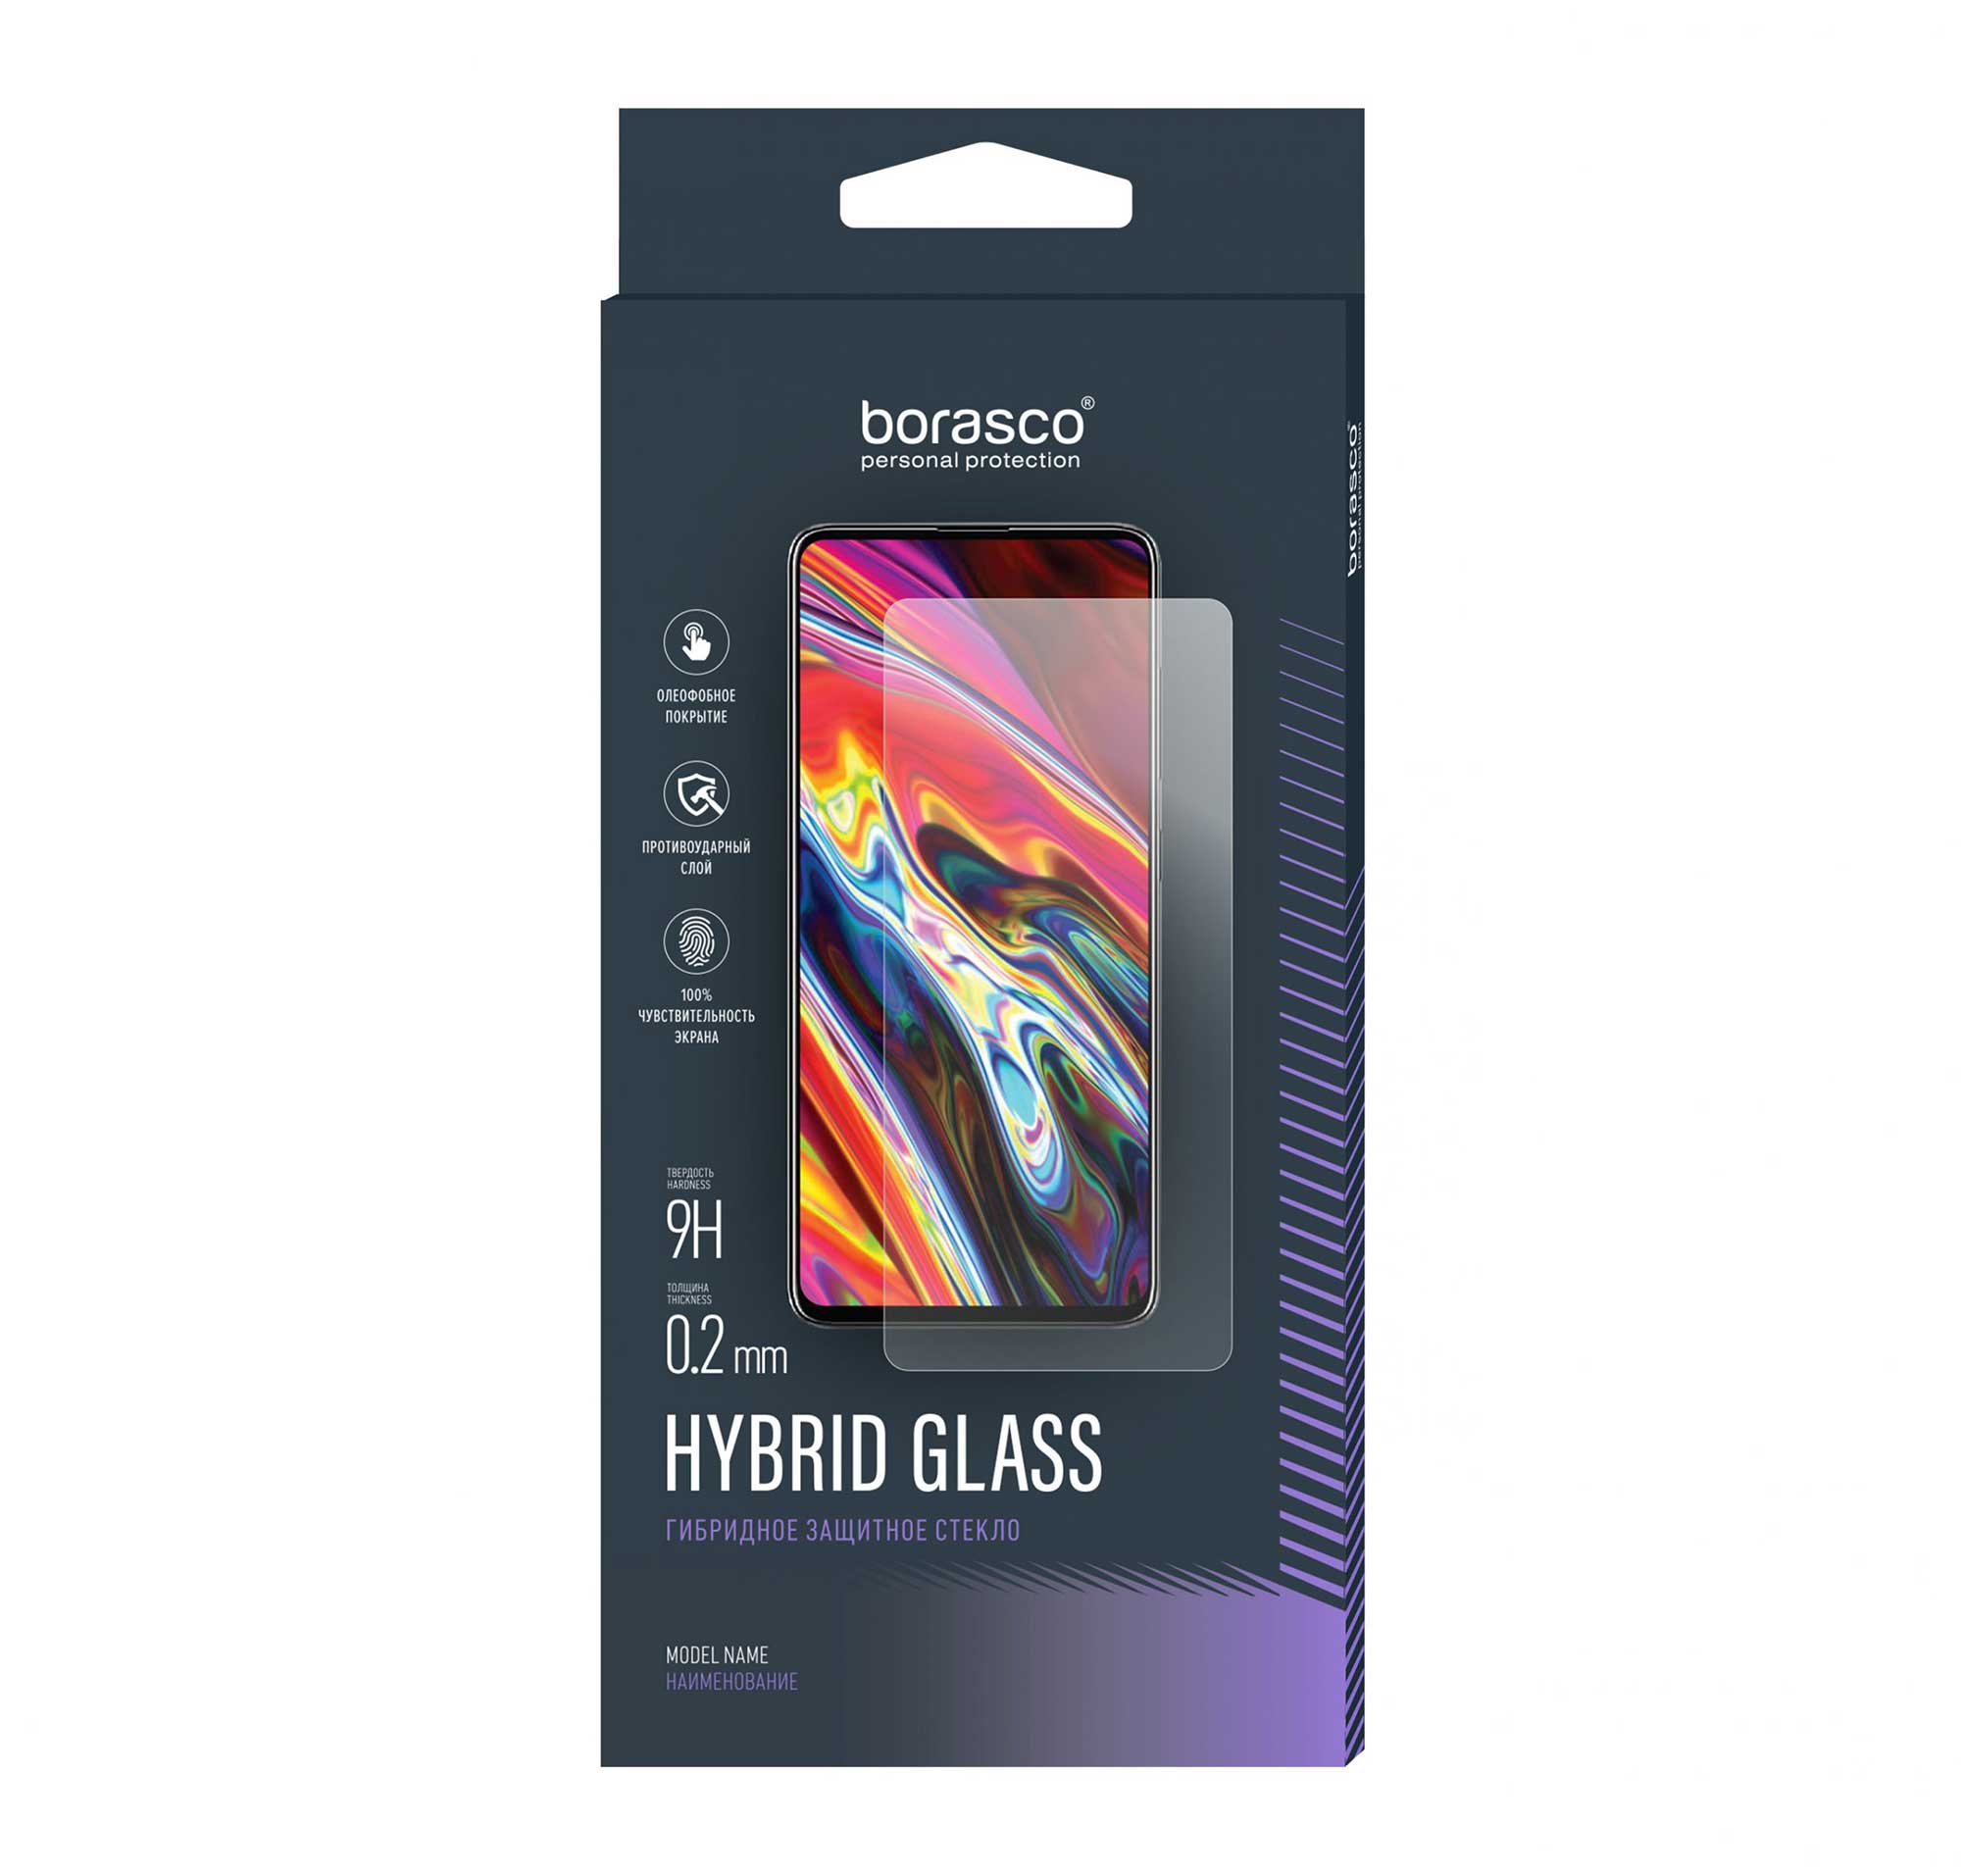 Защитное стекло Hybrid Glass для Universal 20:9 6,5